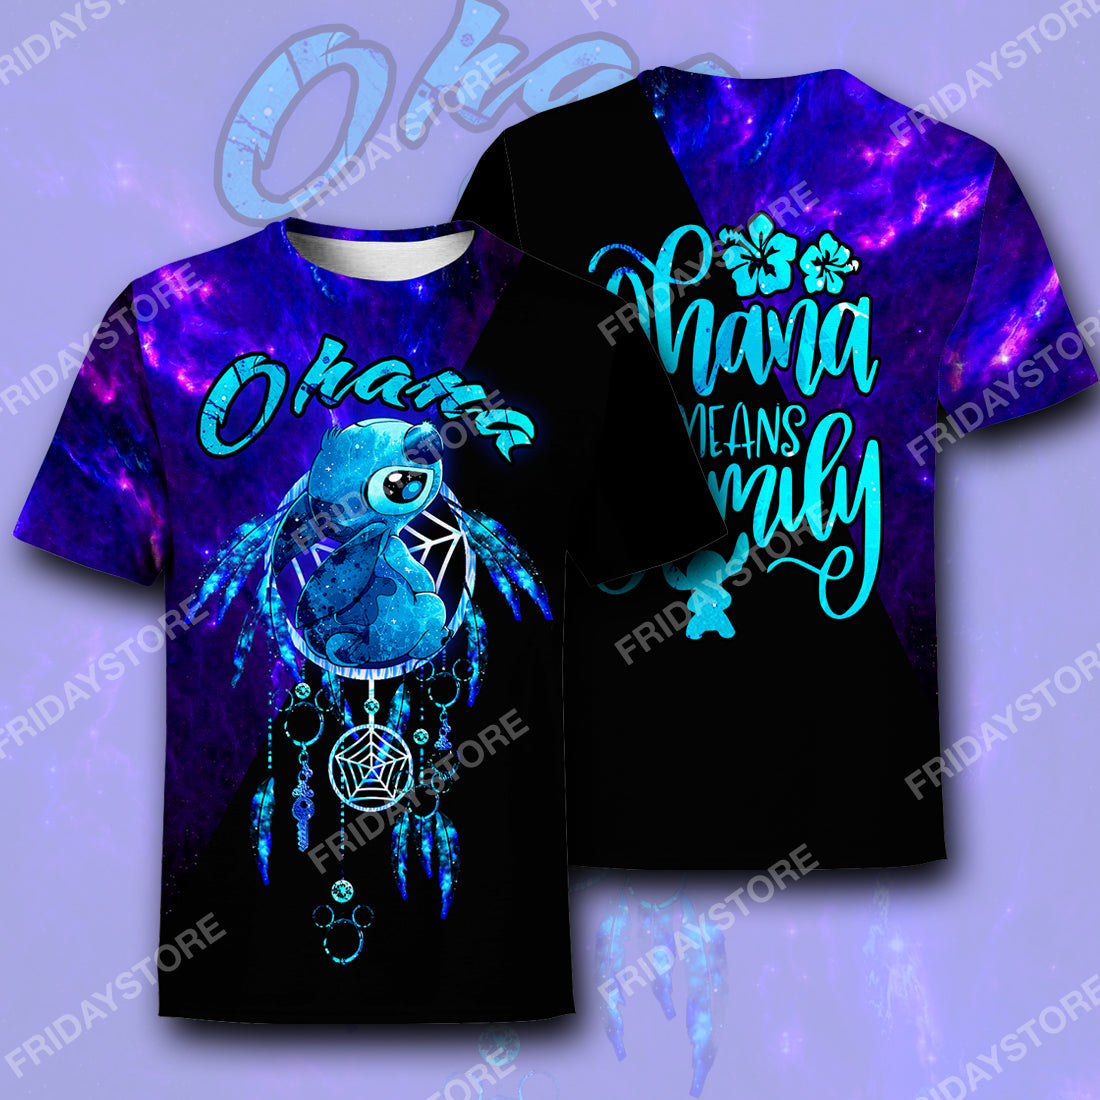 Unifinz LAS T-shirt Ohana Means Family Dreamcatcher T-shirt Amazing DN Stitch Hoodie Sweater Tank 2026